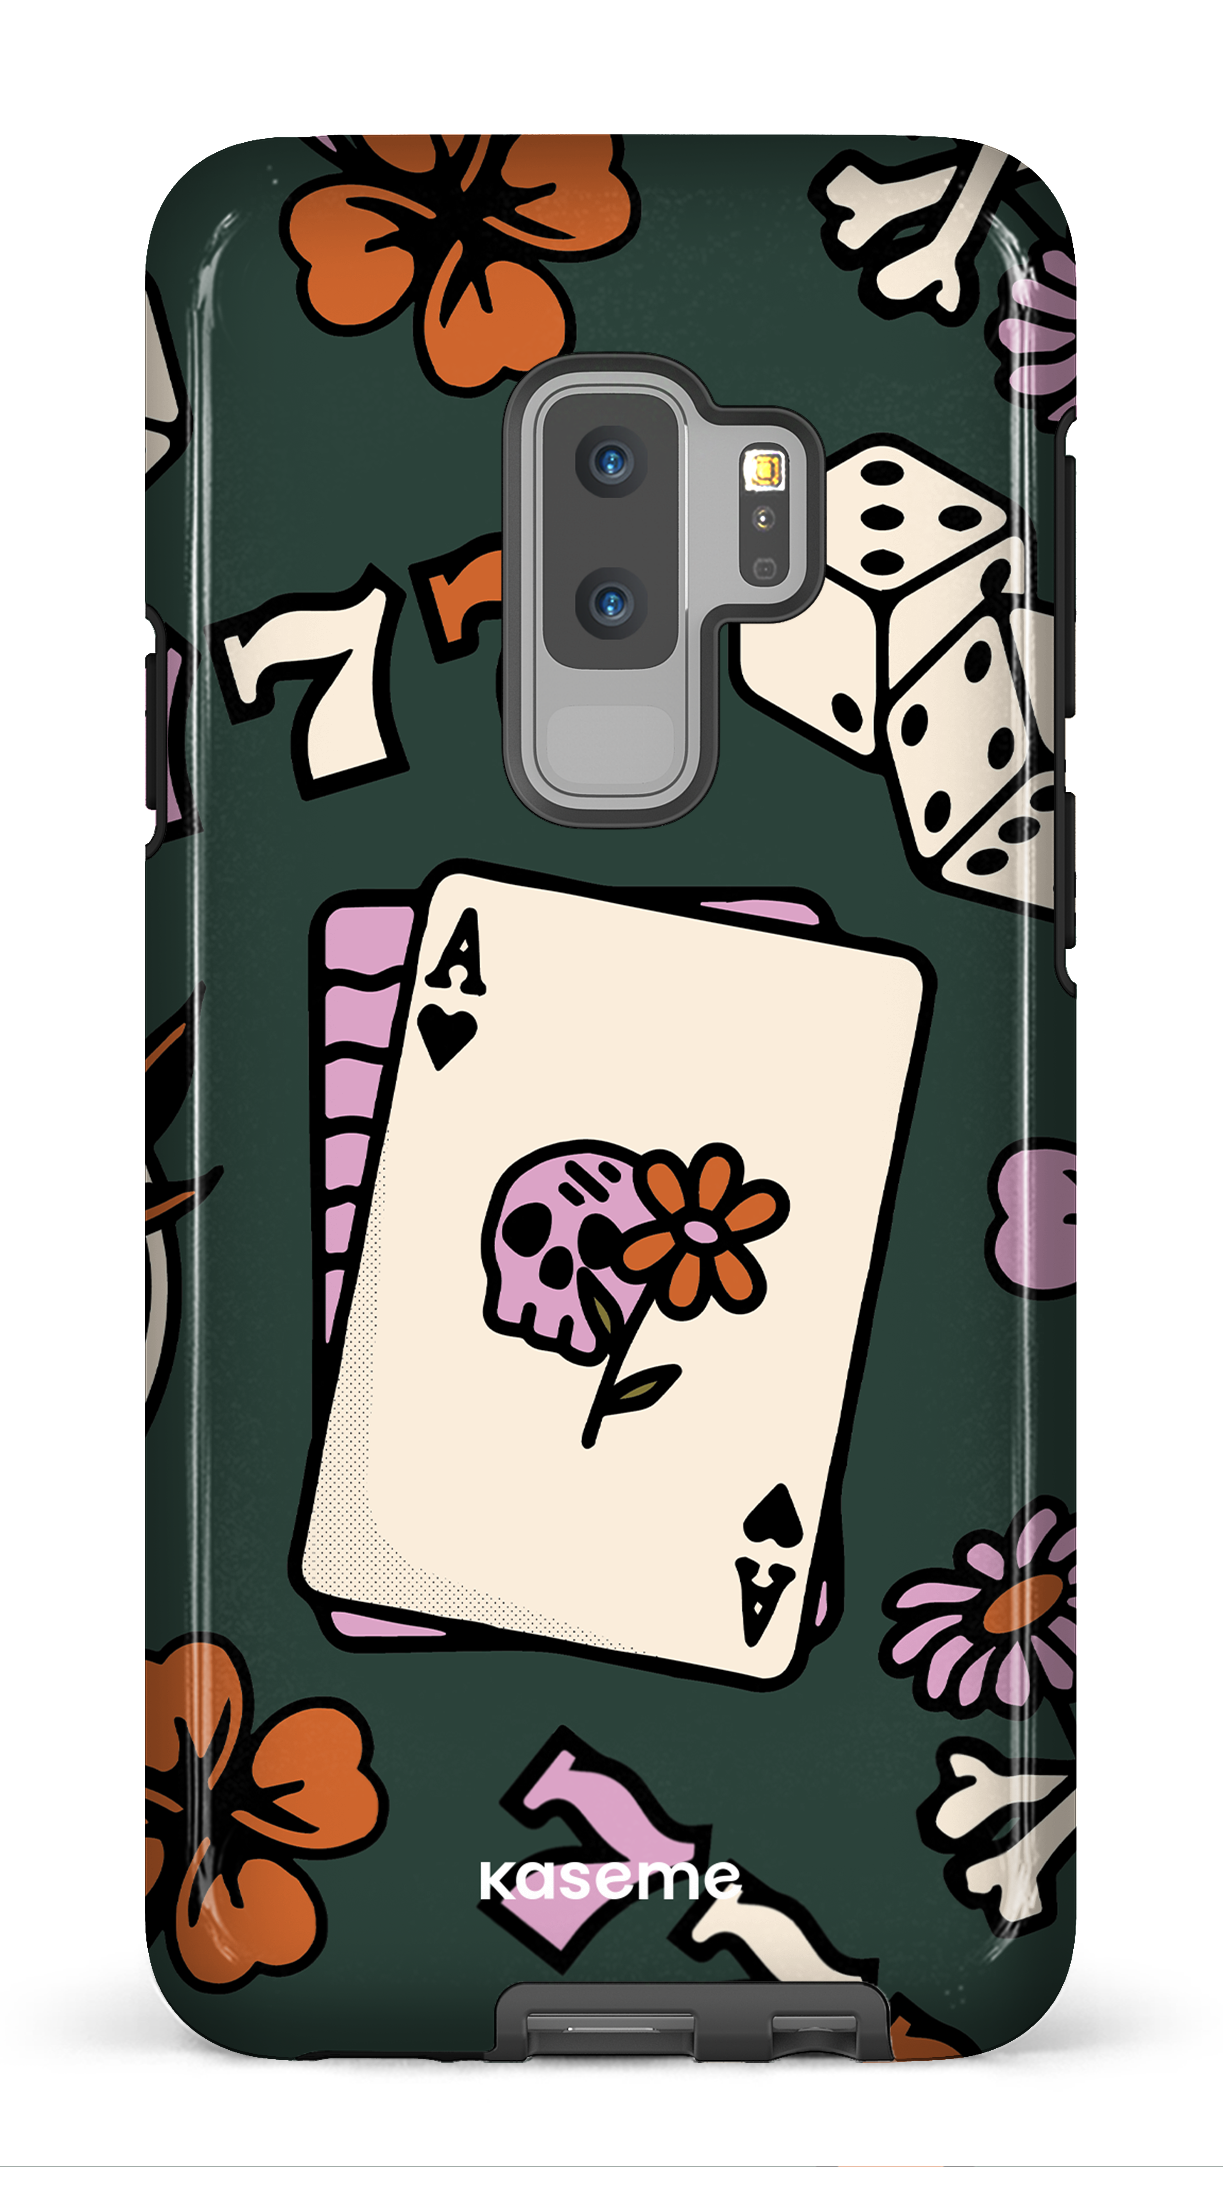 Poker Face - Galaxy S9 Plus